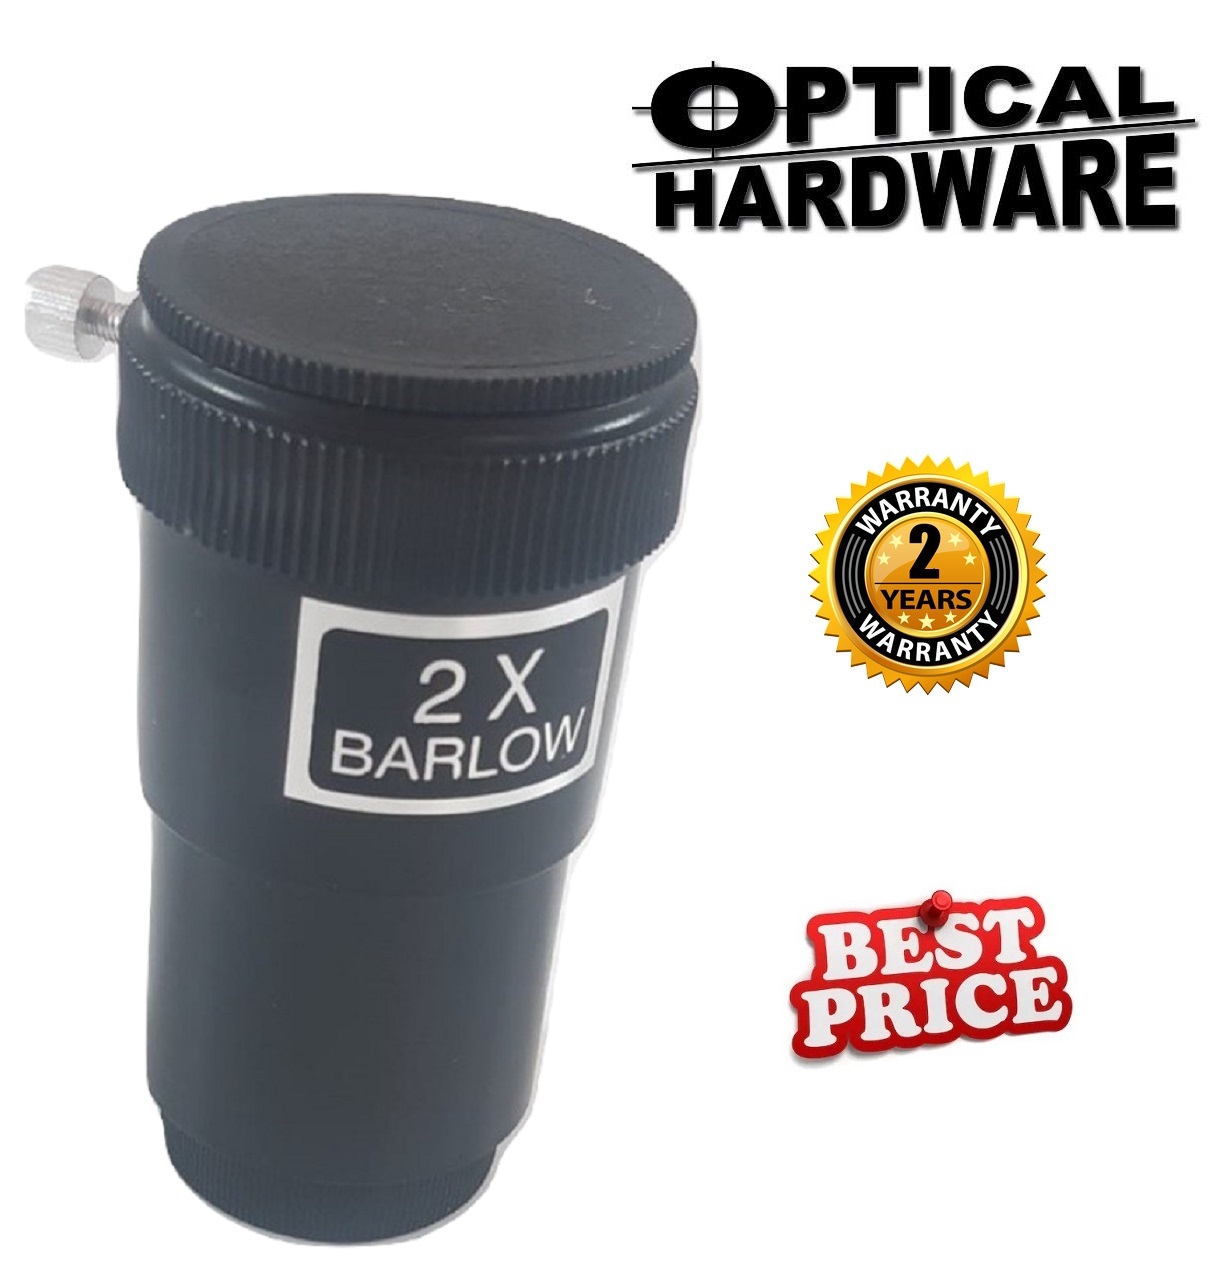 Optical Hardware Standard 2x Barlow for 1.25